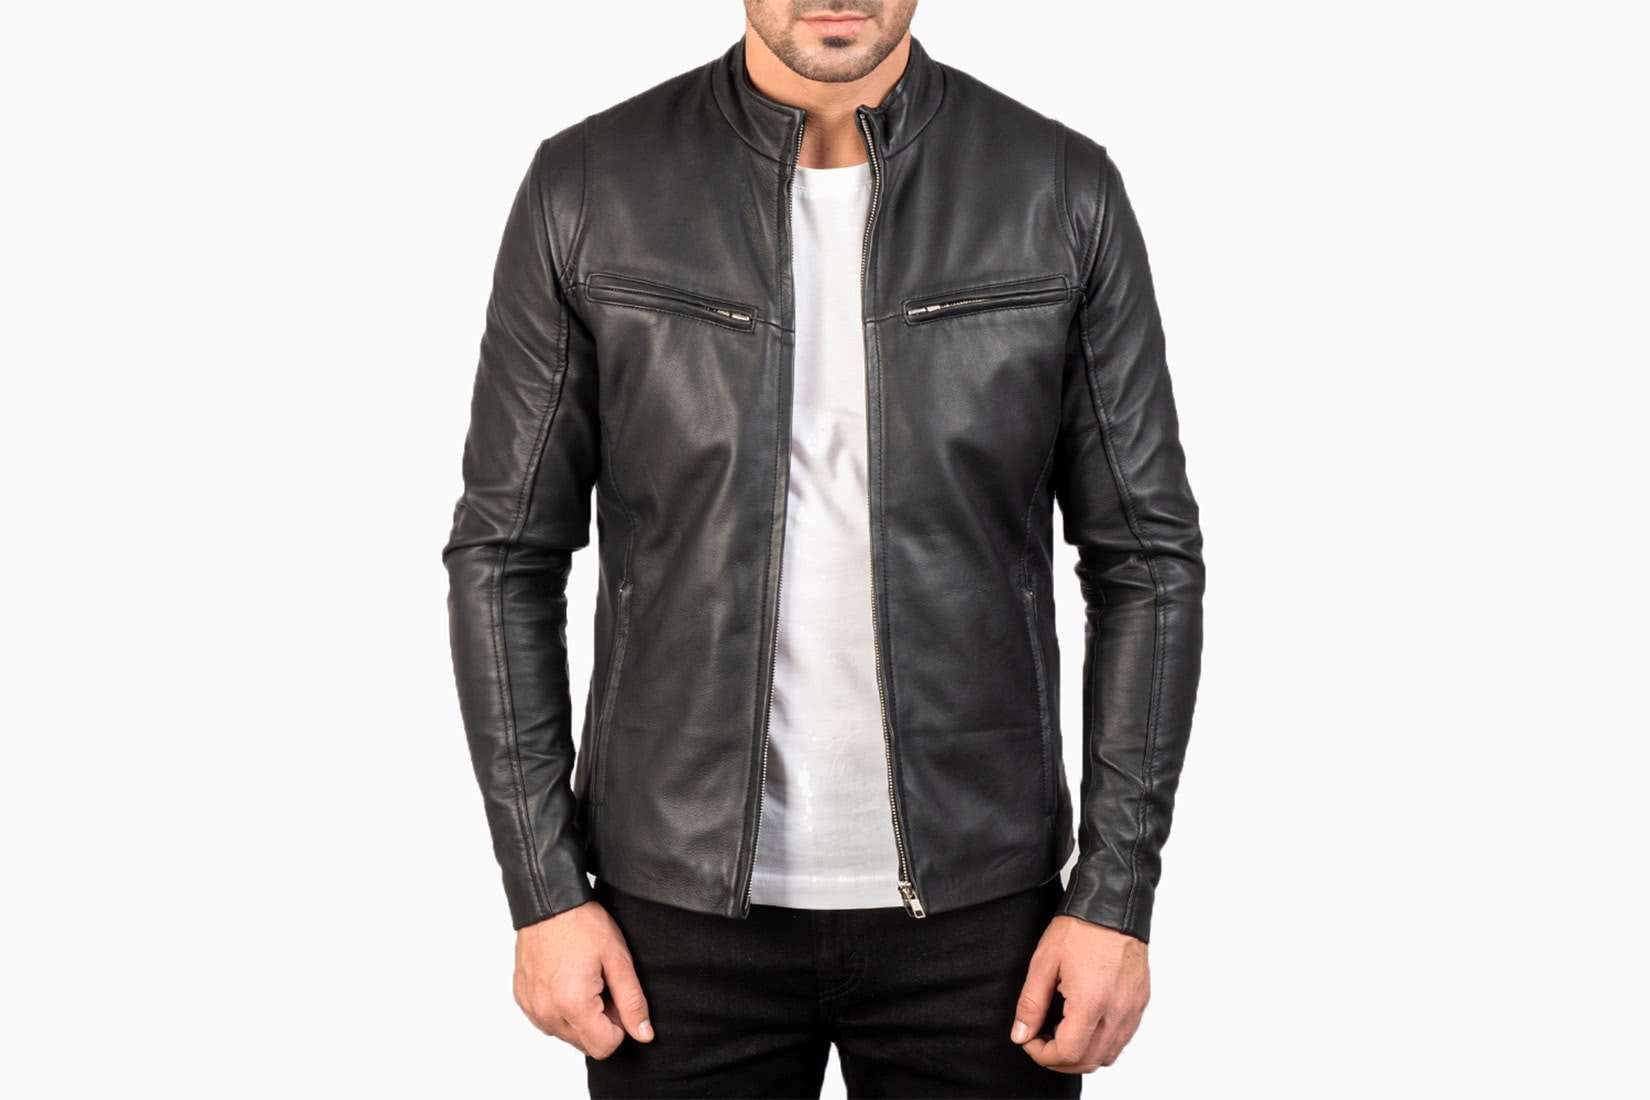 Best Leather Jackets Manufacturer